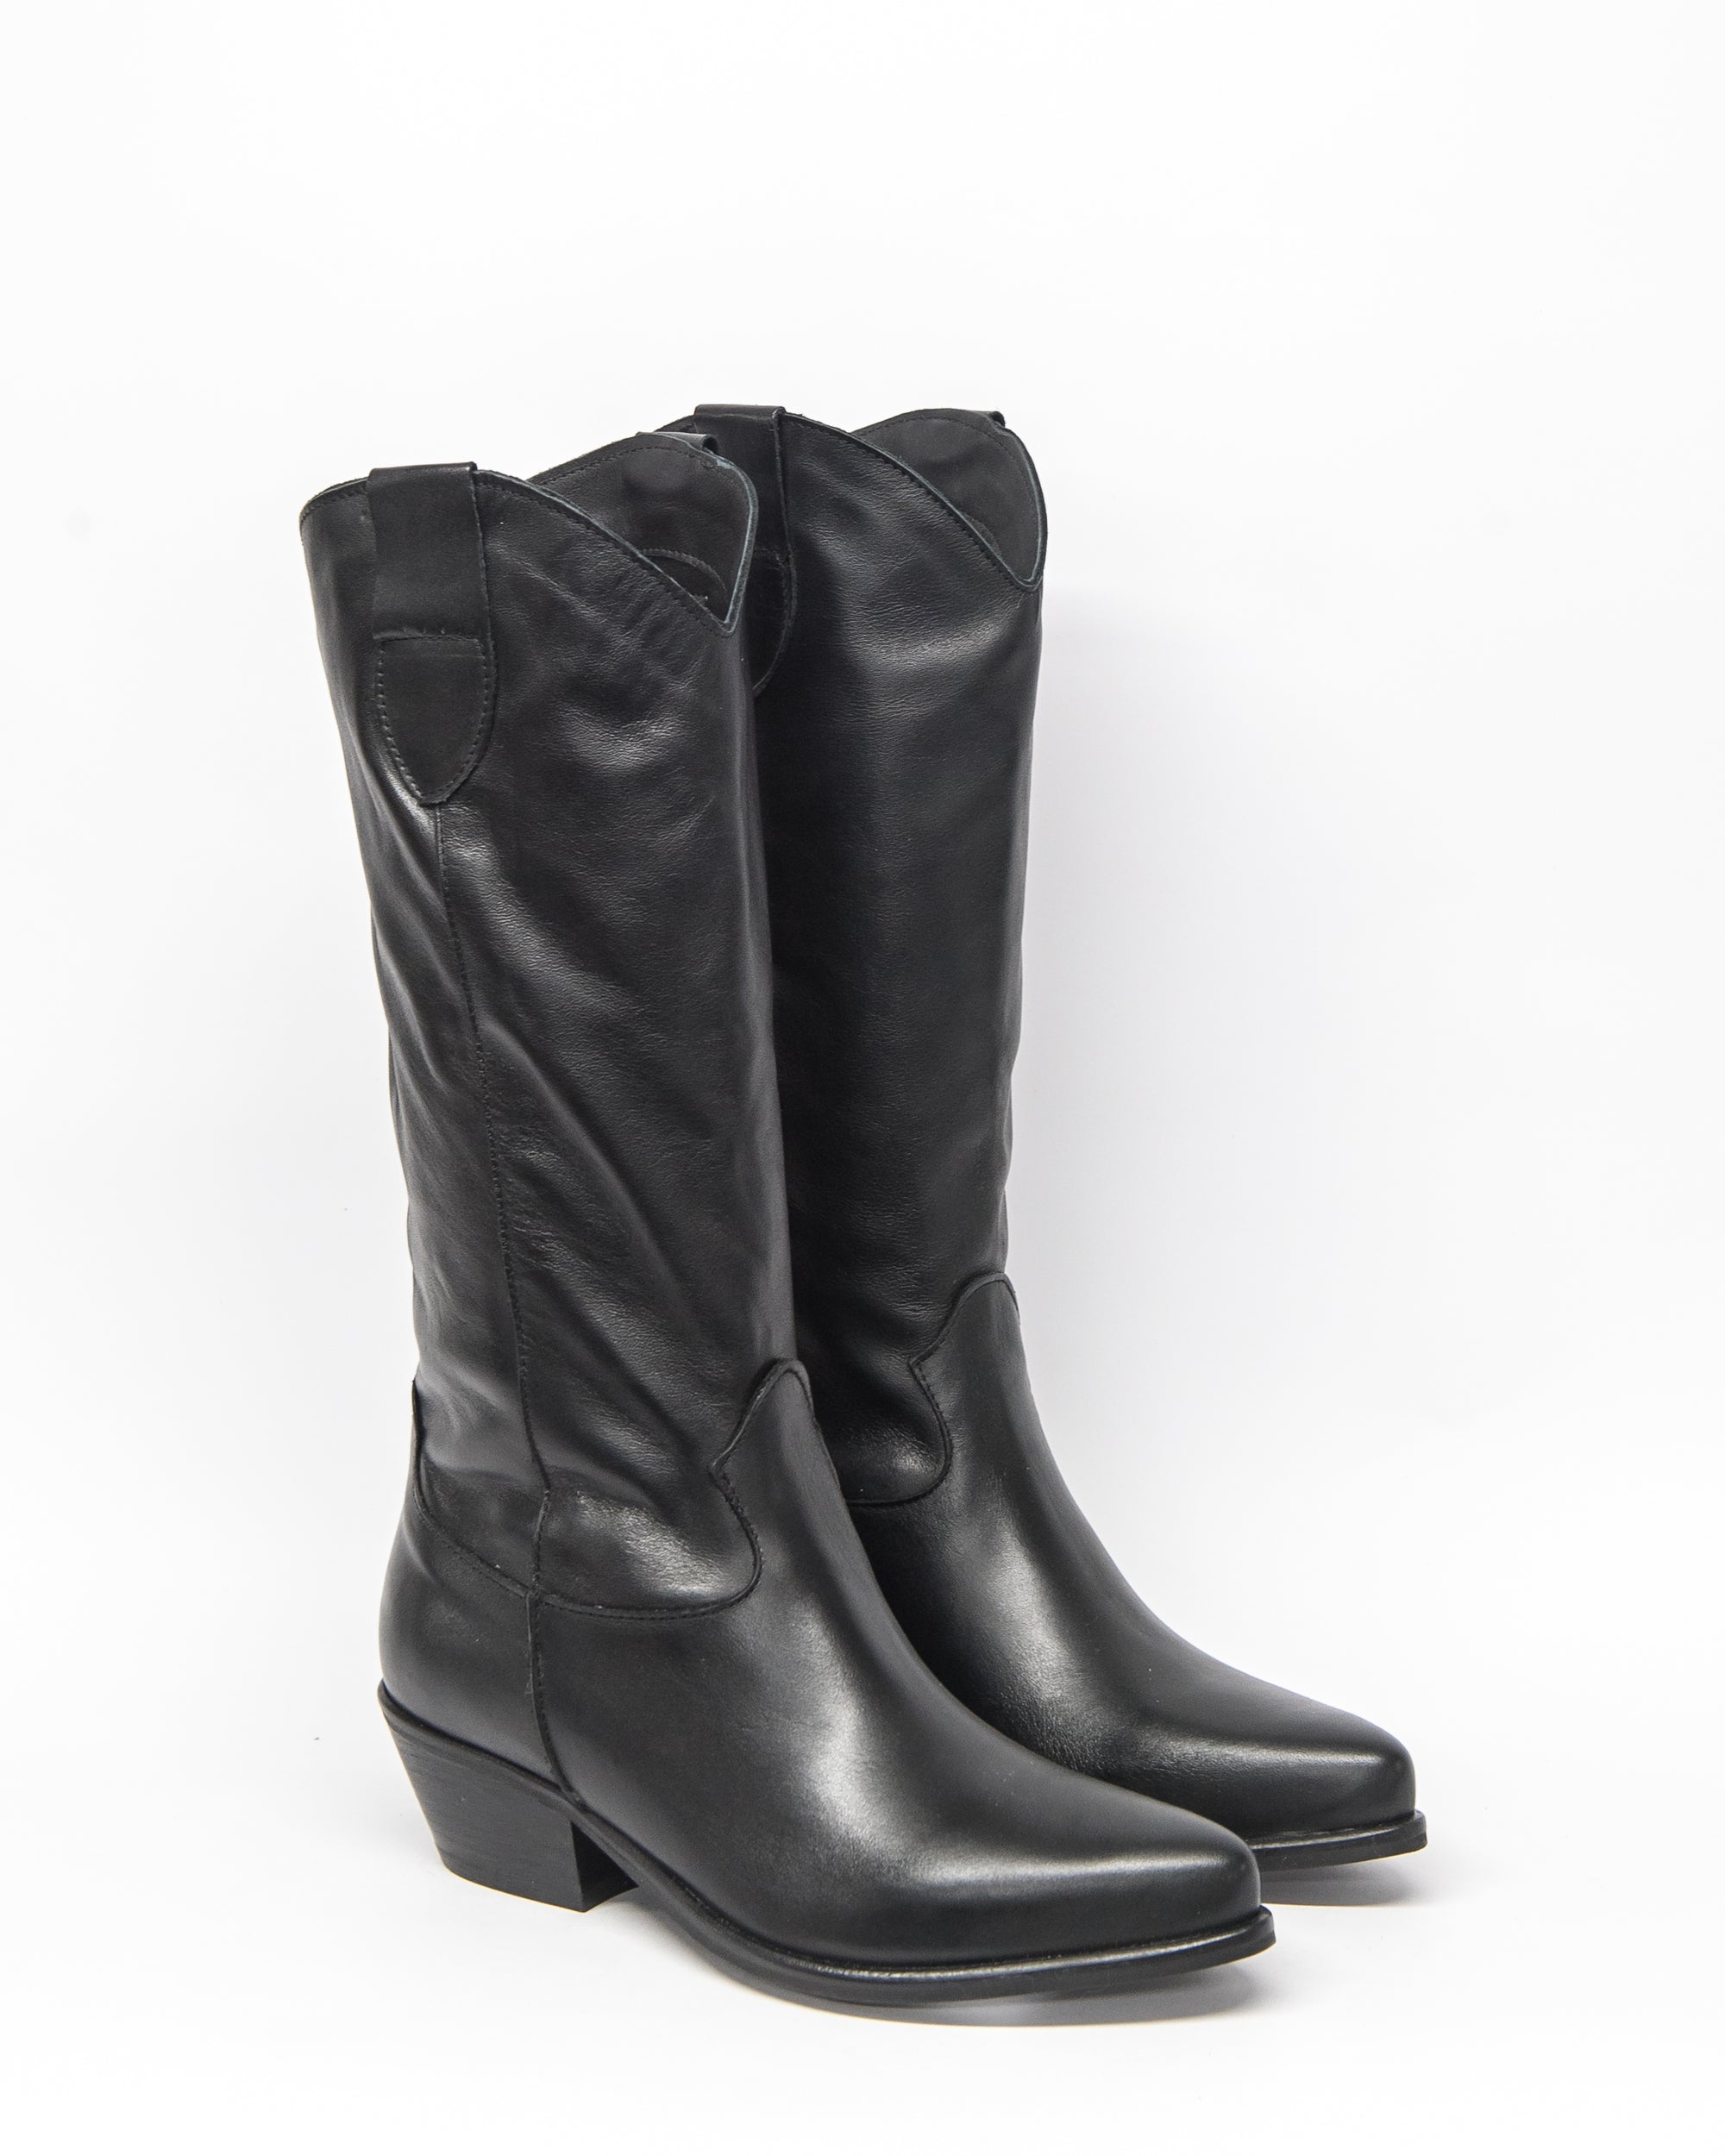 buy sprite boot - black leather | zoe kratzmann